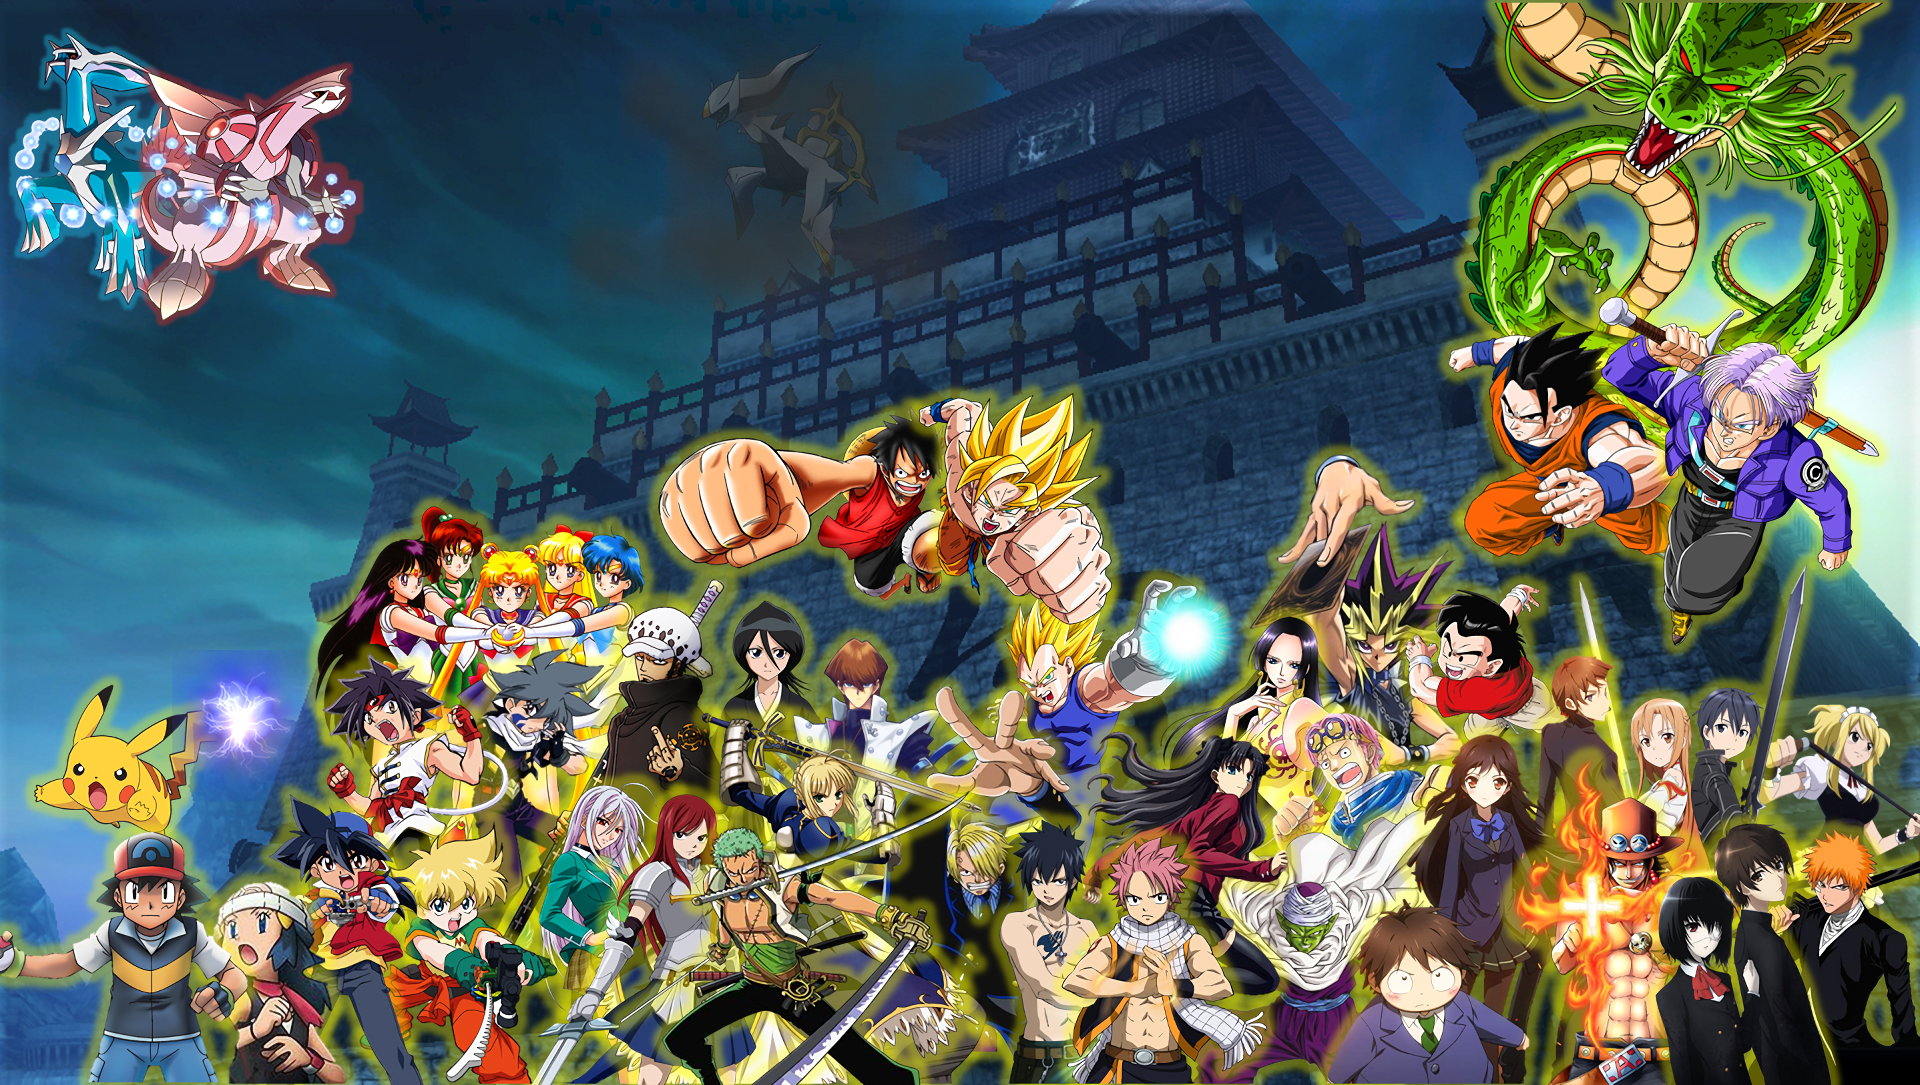 Download Natsu Dragneel and Lucy Heartfilia Dragon Anime Art Wallpaper